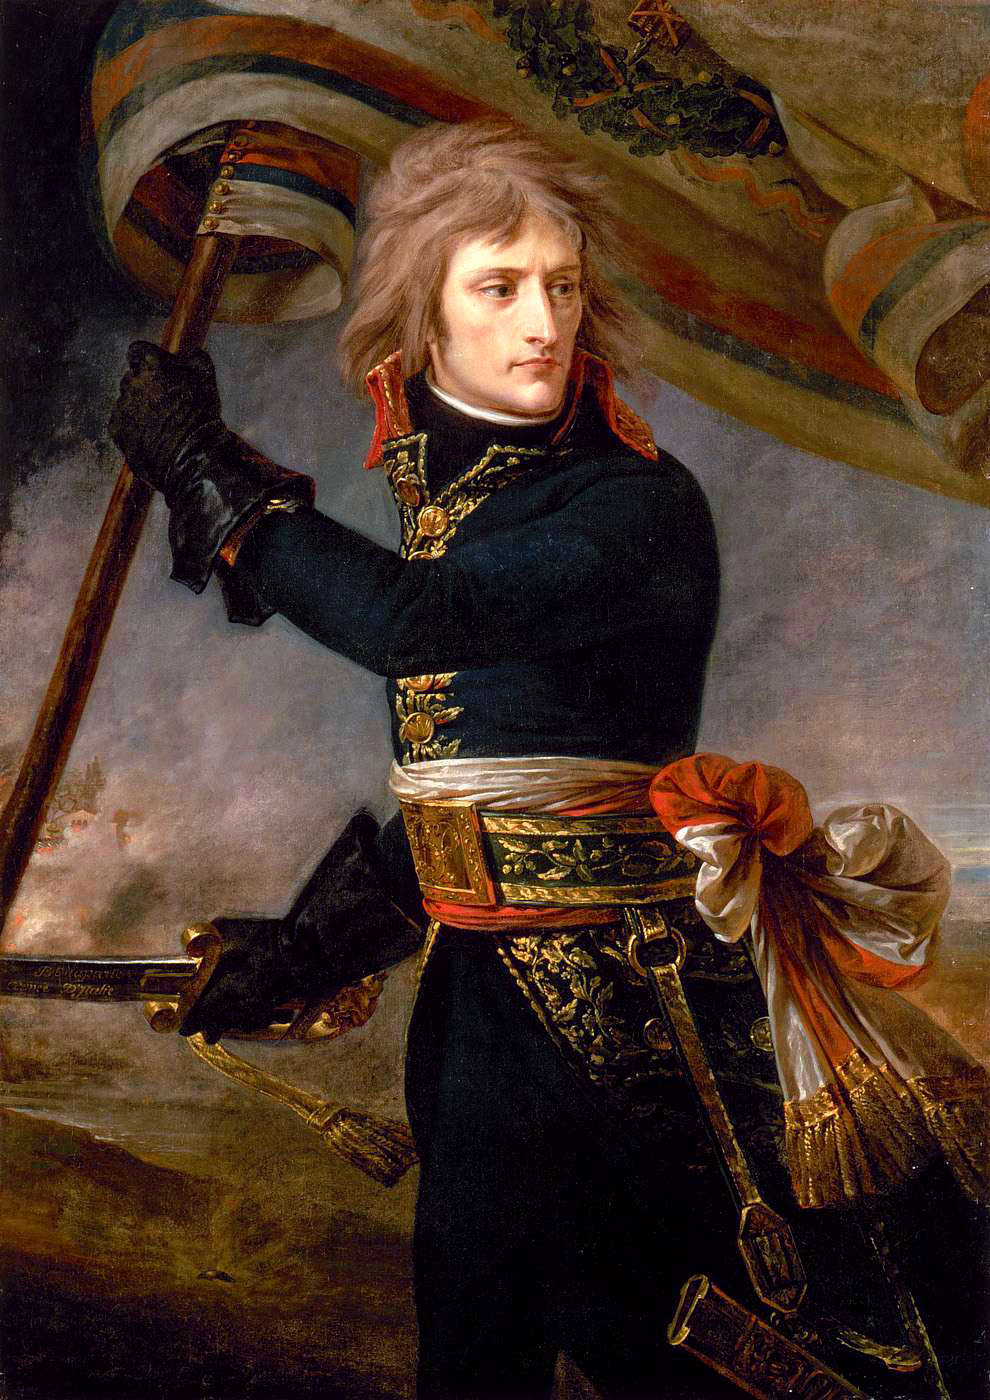 1801_Antoine-Jean_Gros_-_Bonaparte_on_the_Bridge_at_Arcole.jpg